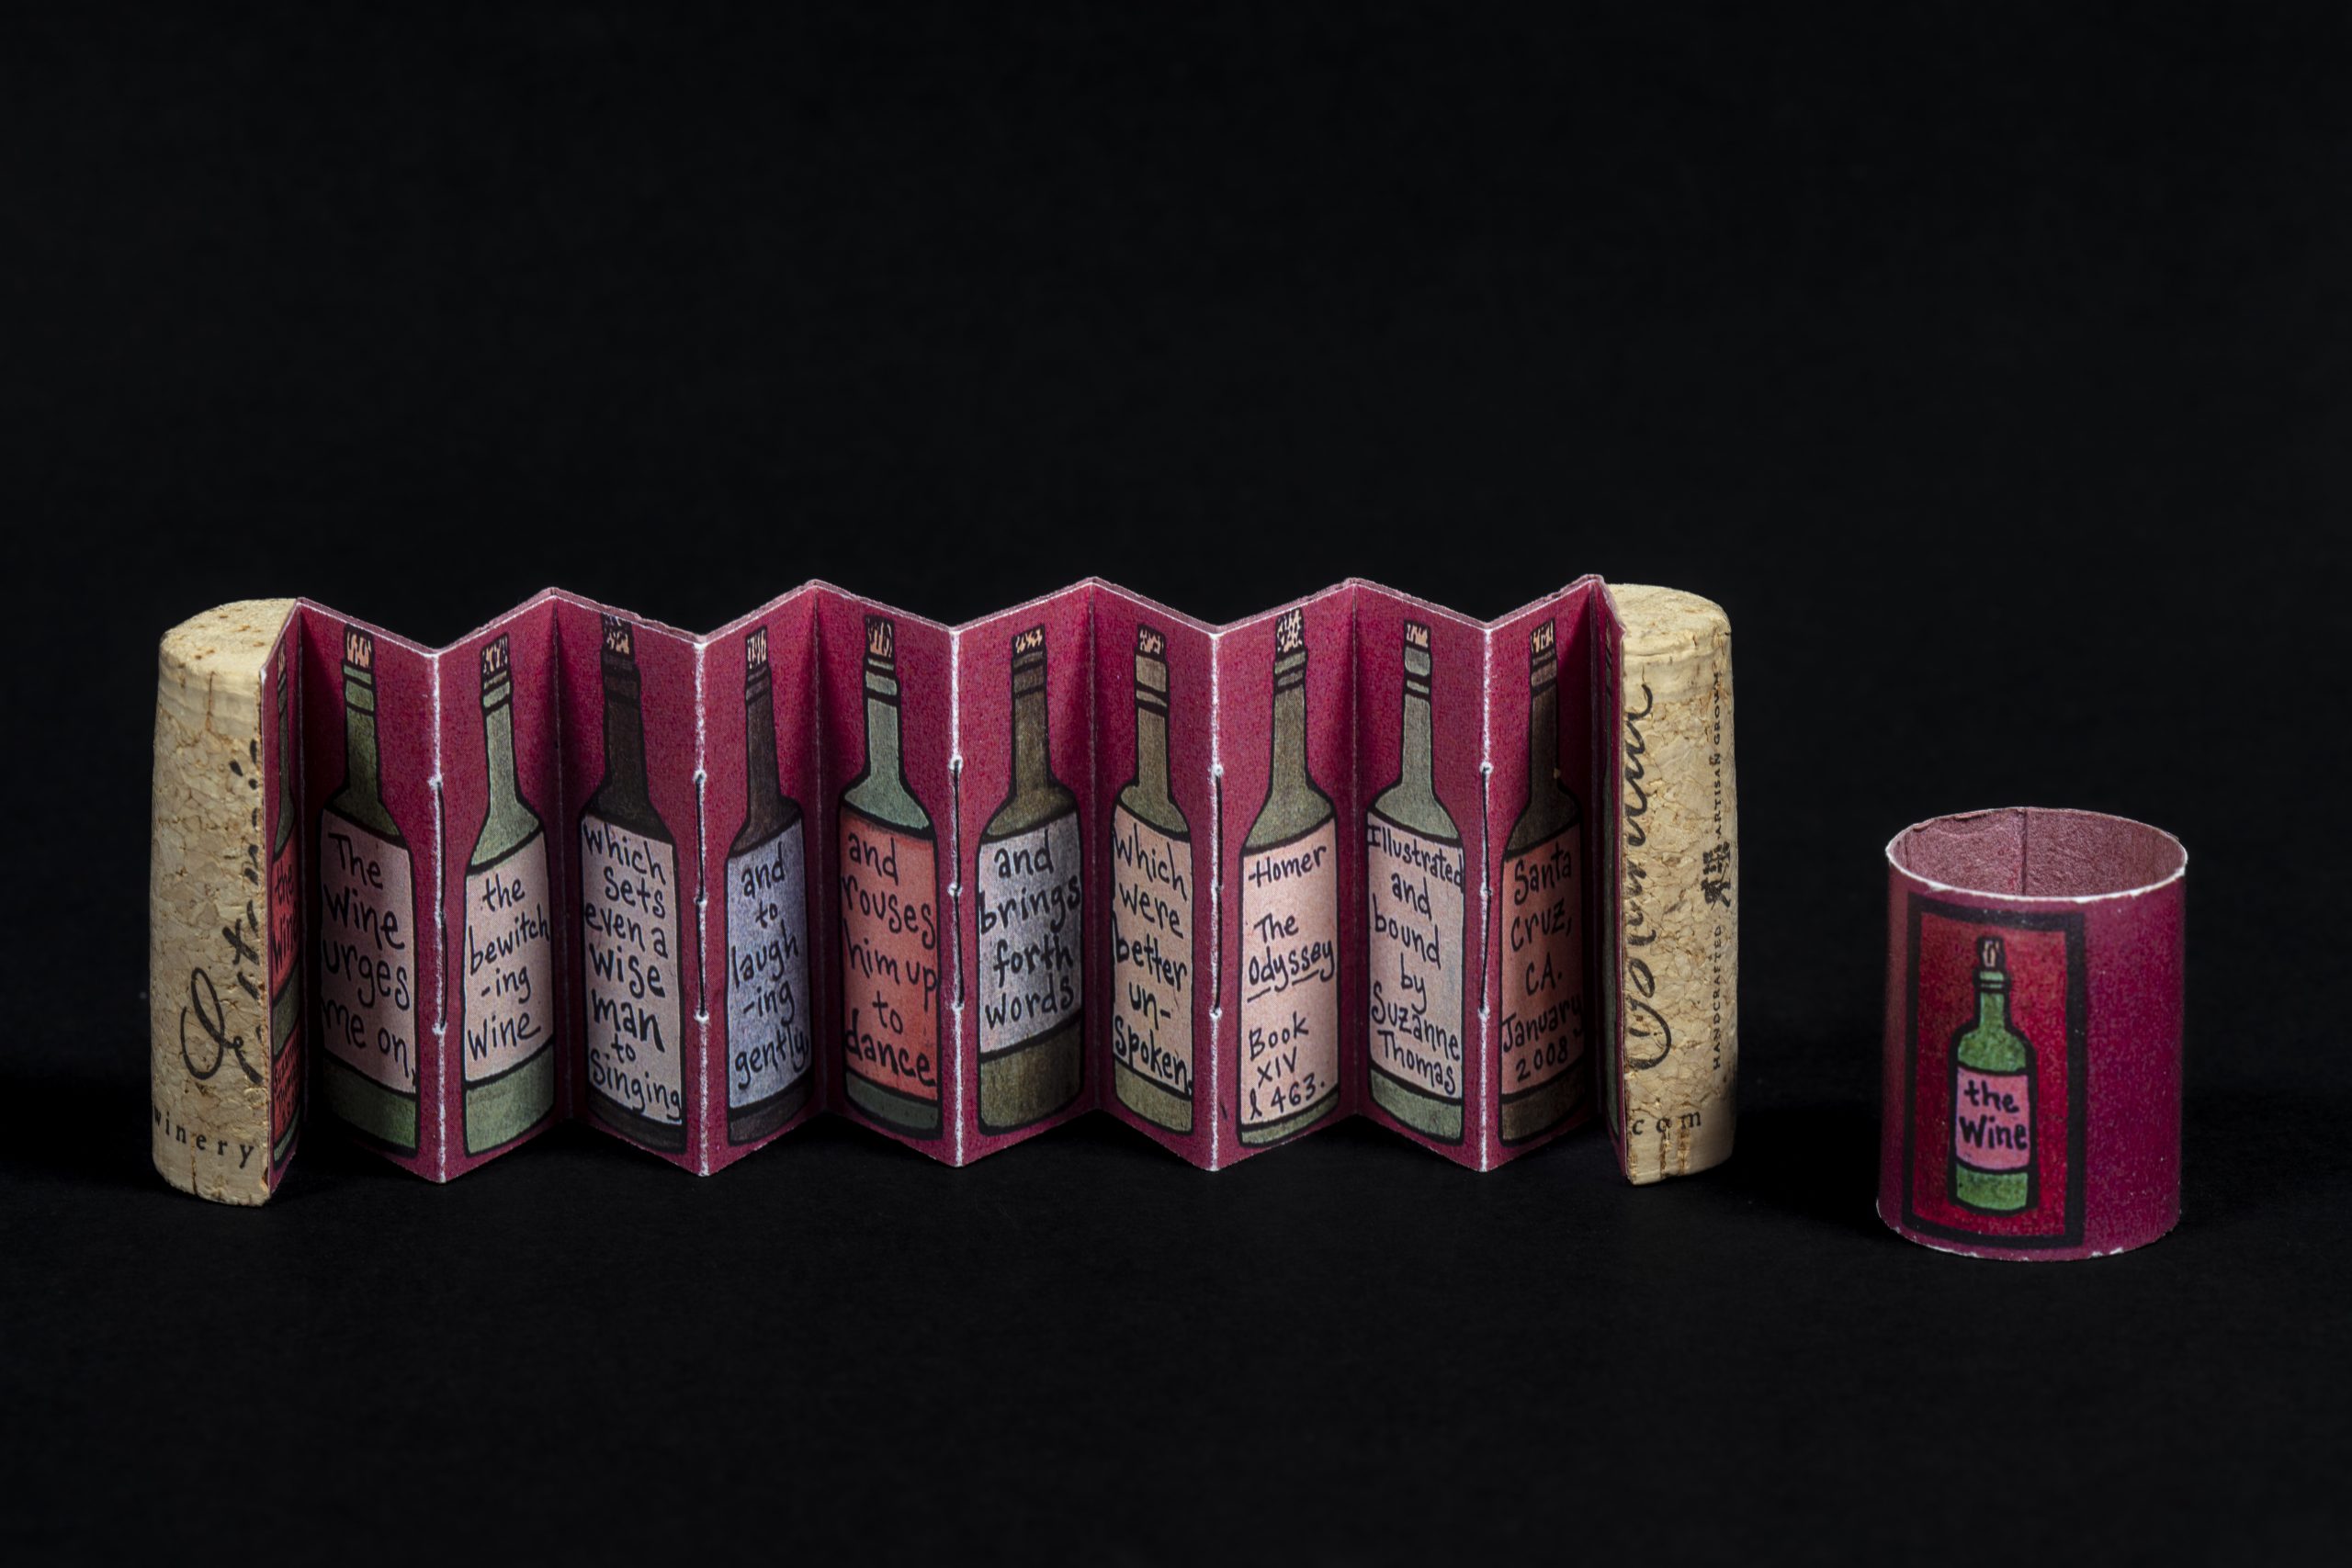 Art object of wine cork split open with panels of illustrated wine bottles.